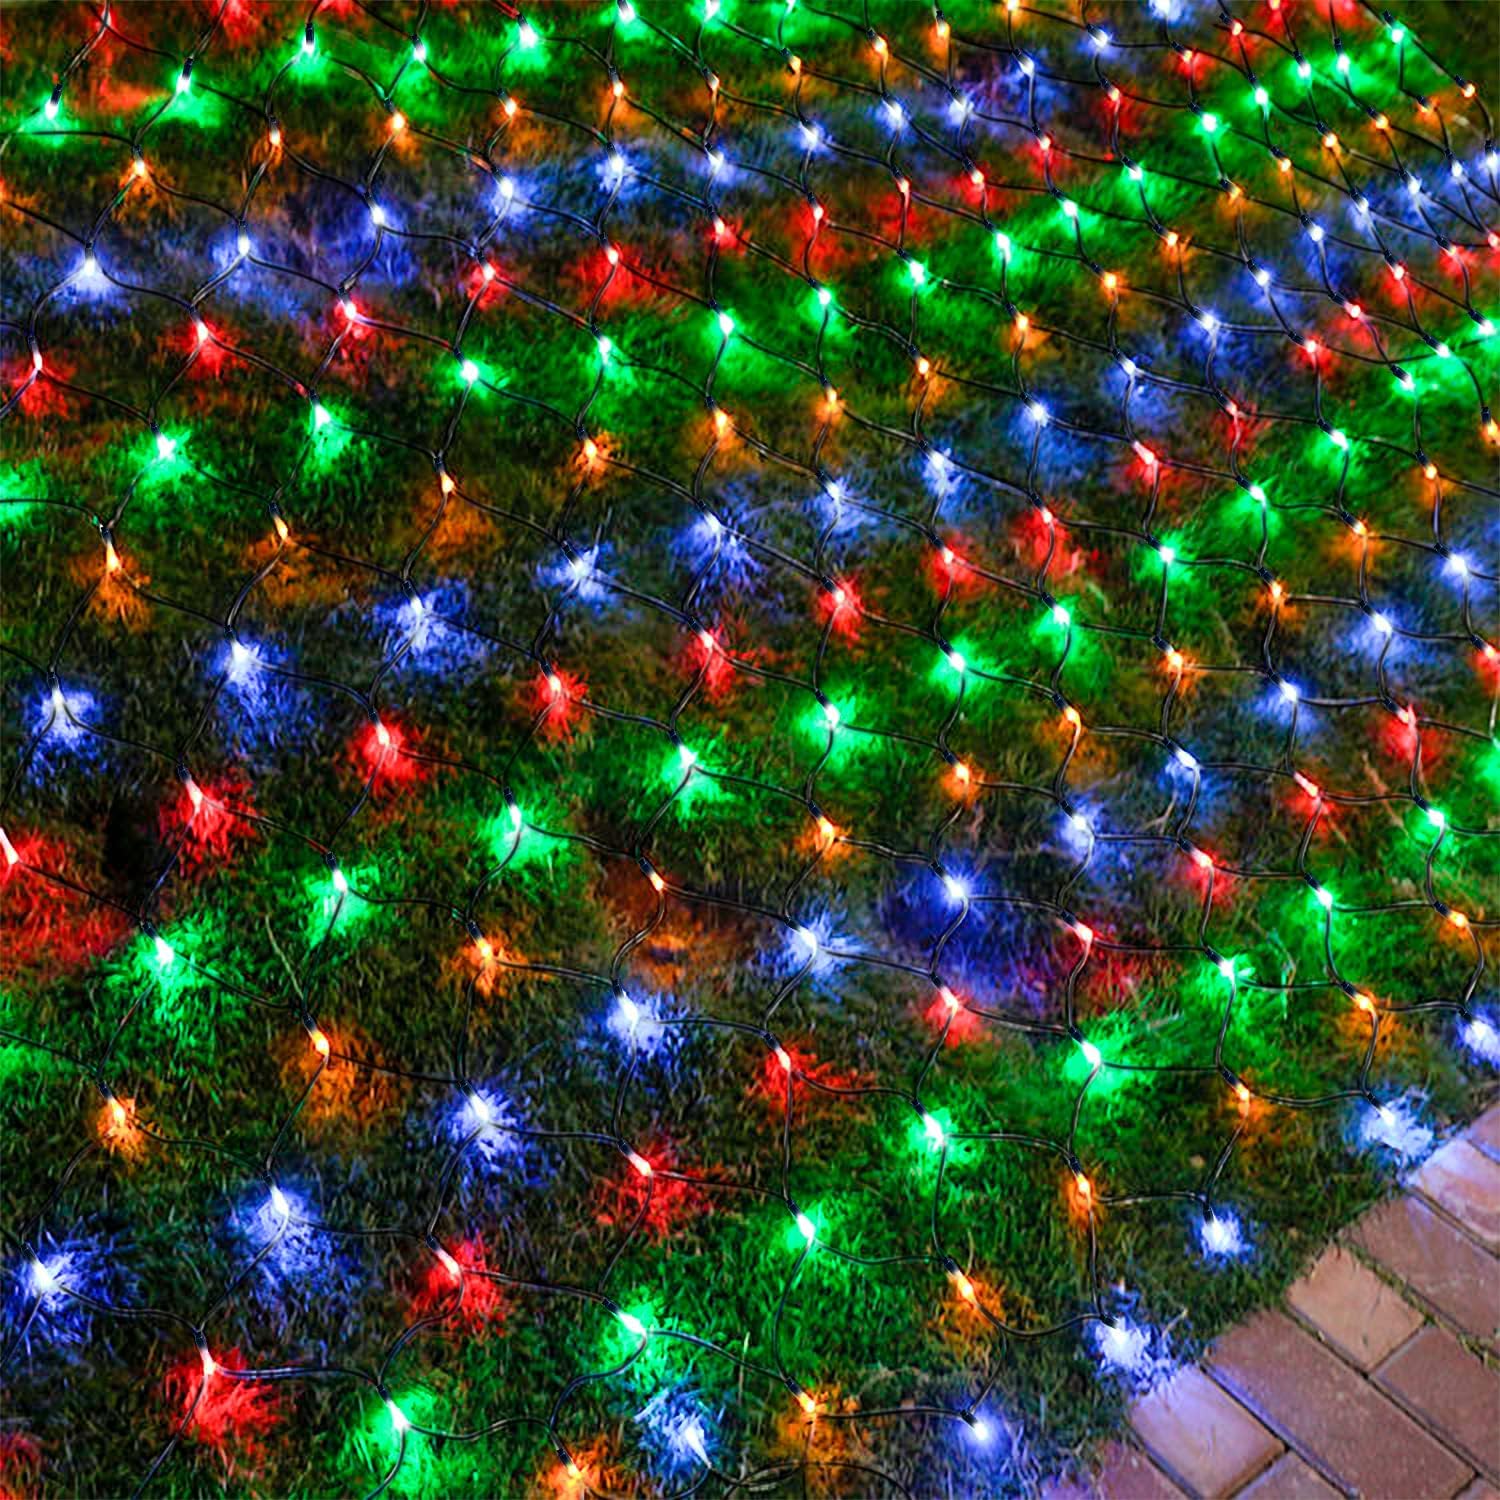 Outdoor Net Lights 240 Led Christmas Mains Powered Garden Fence Curtain Decor UK Świetna wartość zapasów